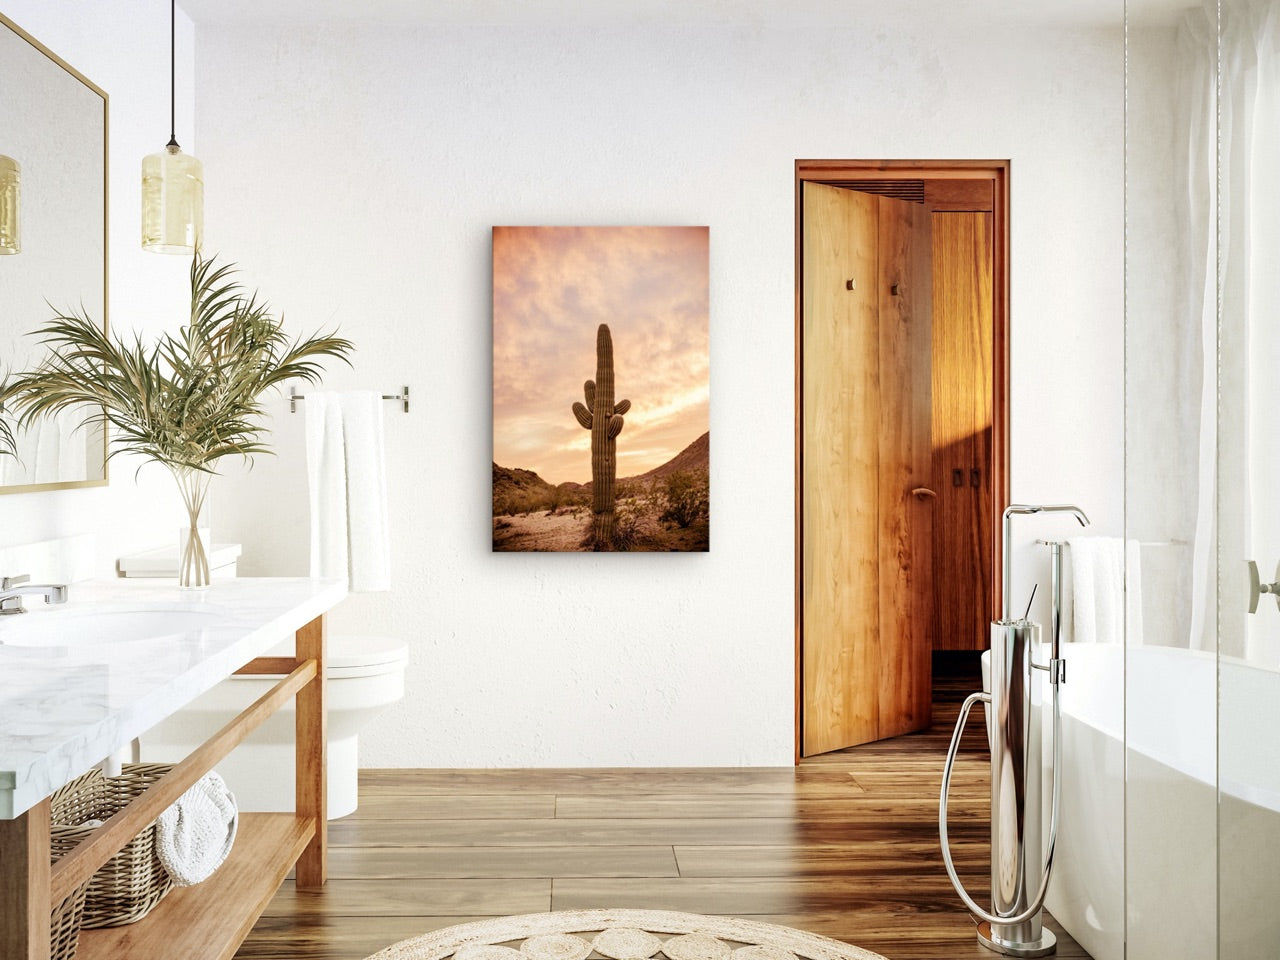 cactus photograph in modern bathroom